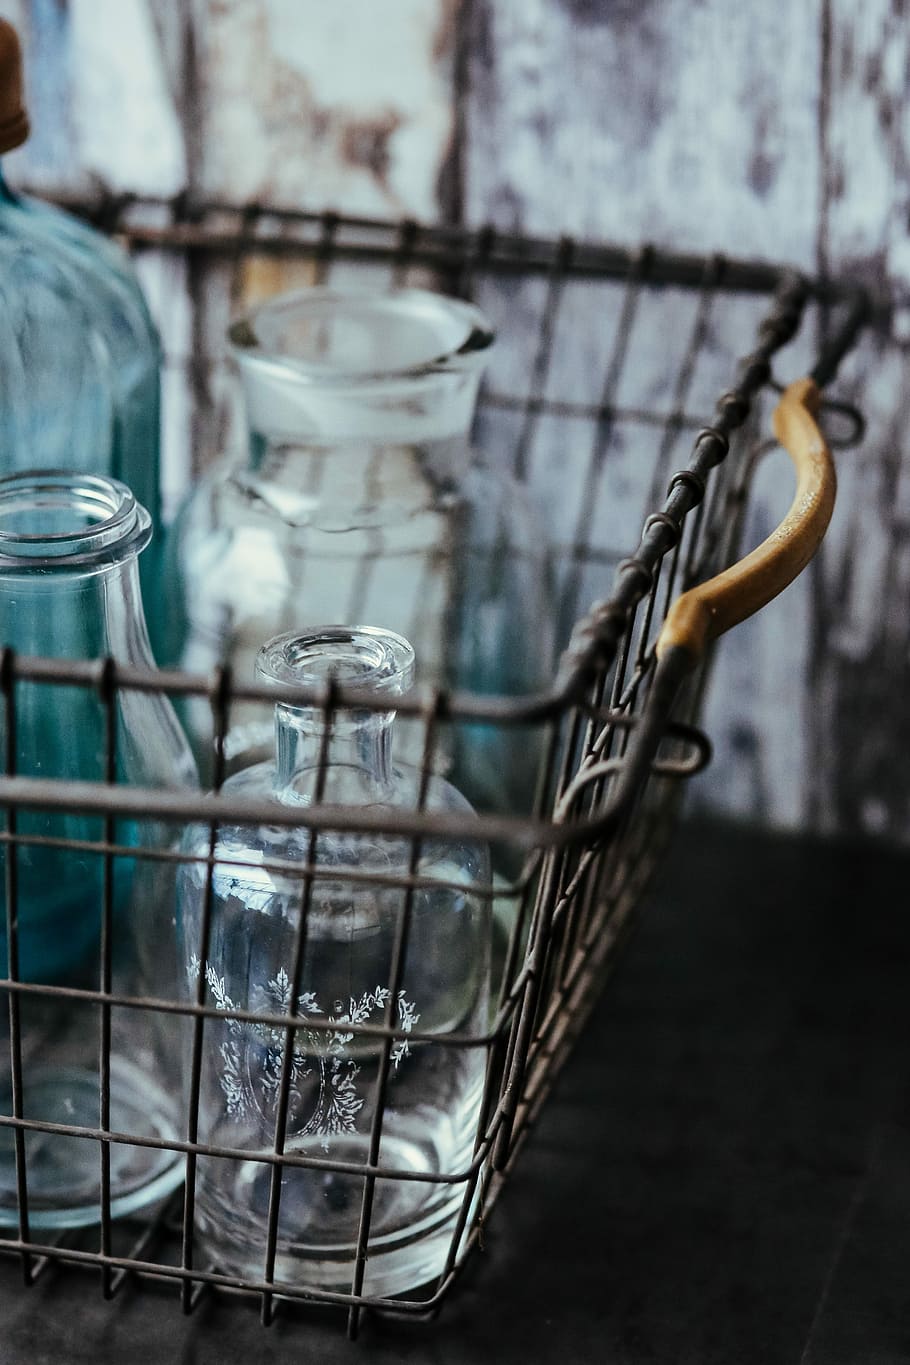 bottles, metal mesh basket, Collection, metal, mesh, basket, vintage, retro, indoors, day